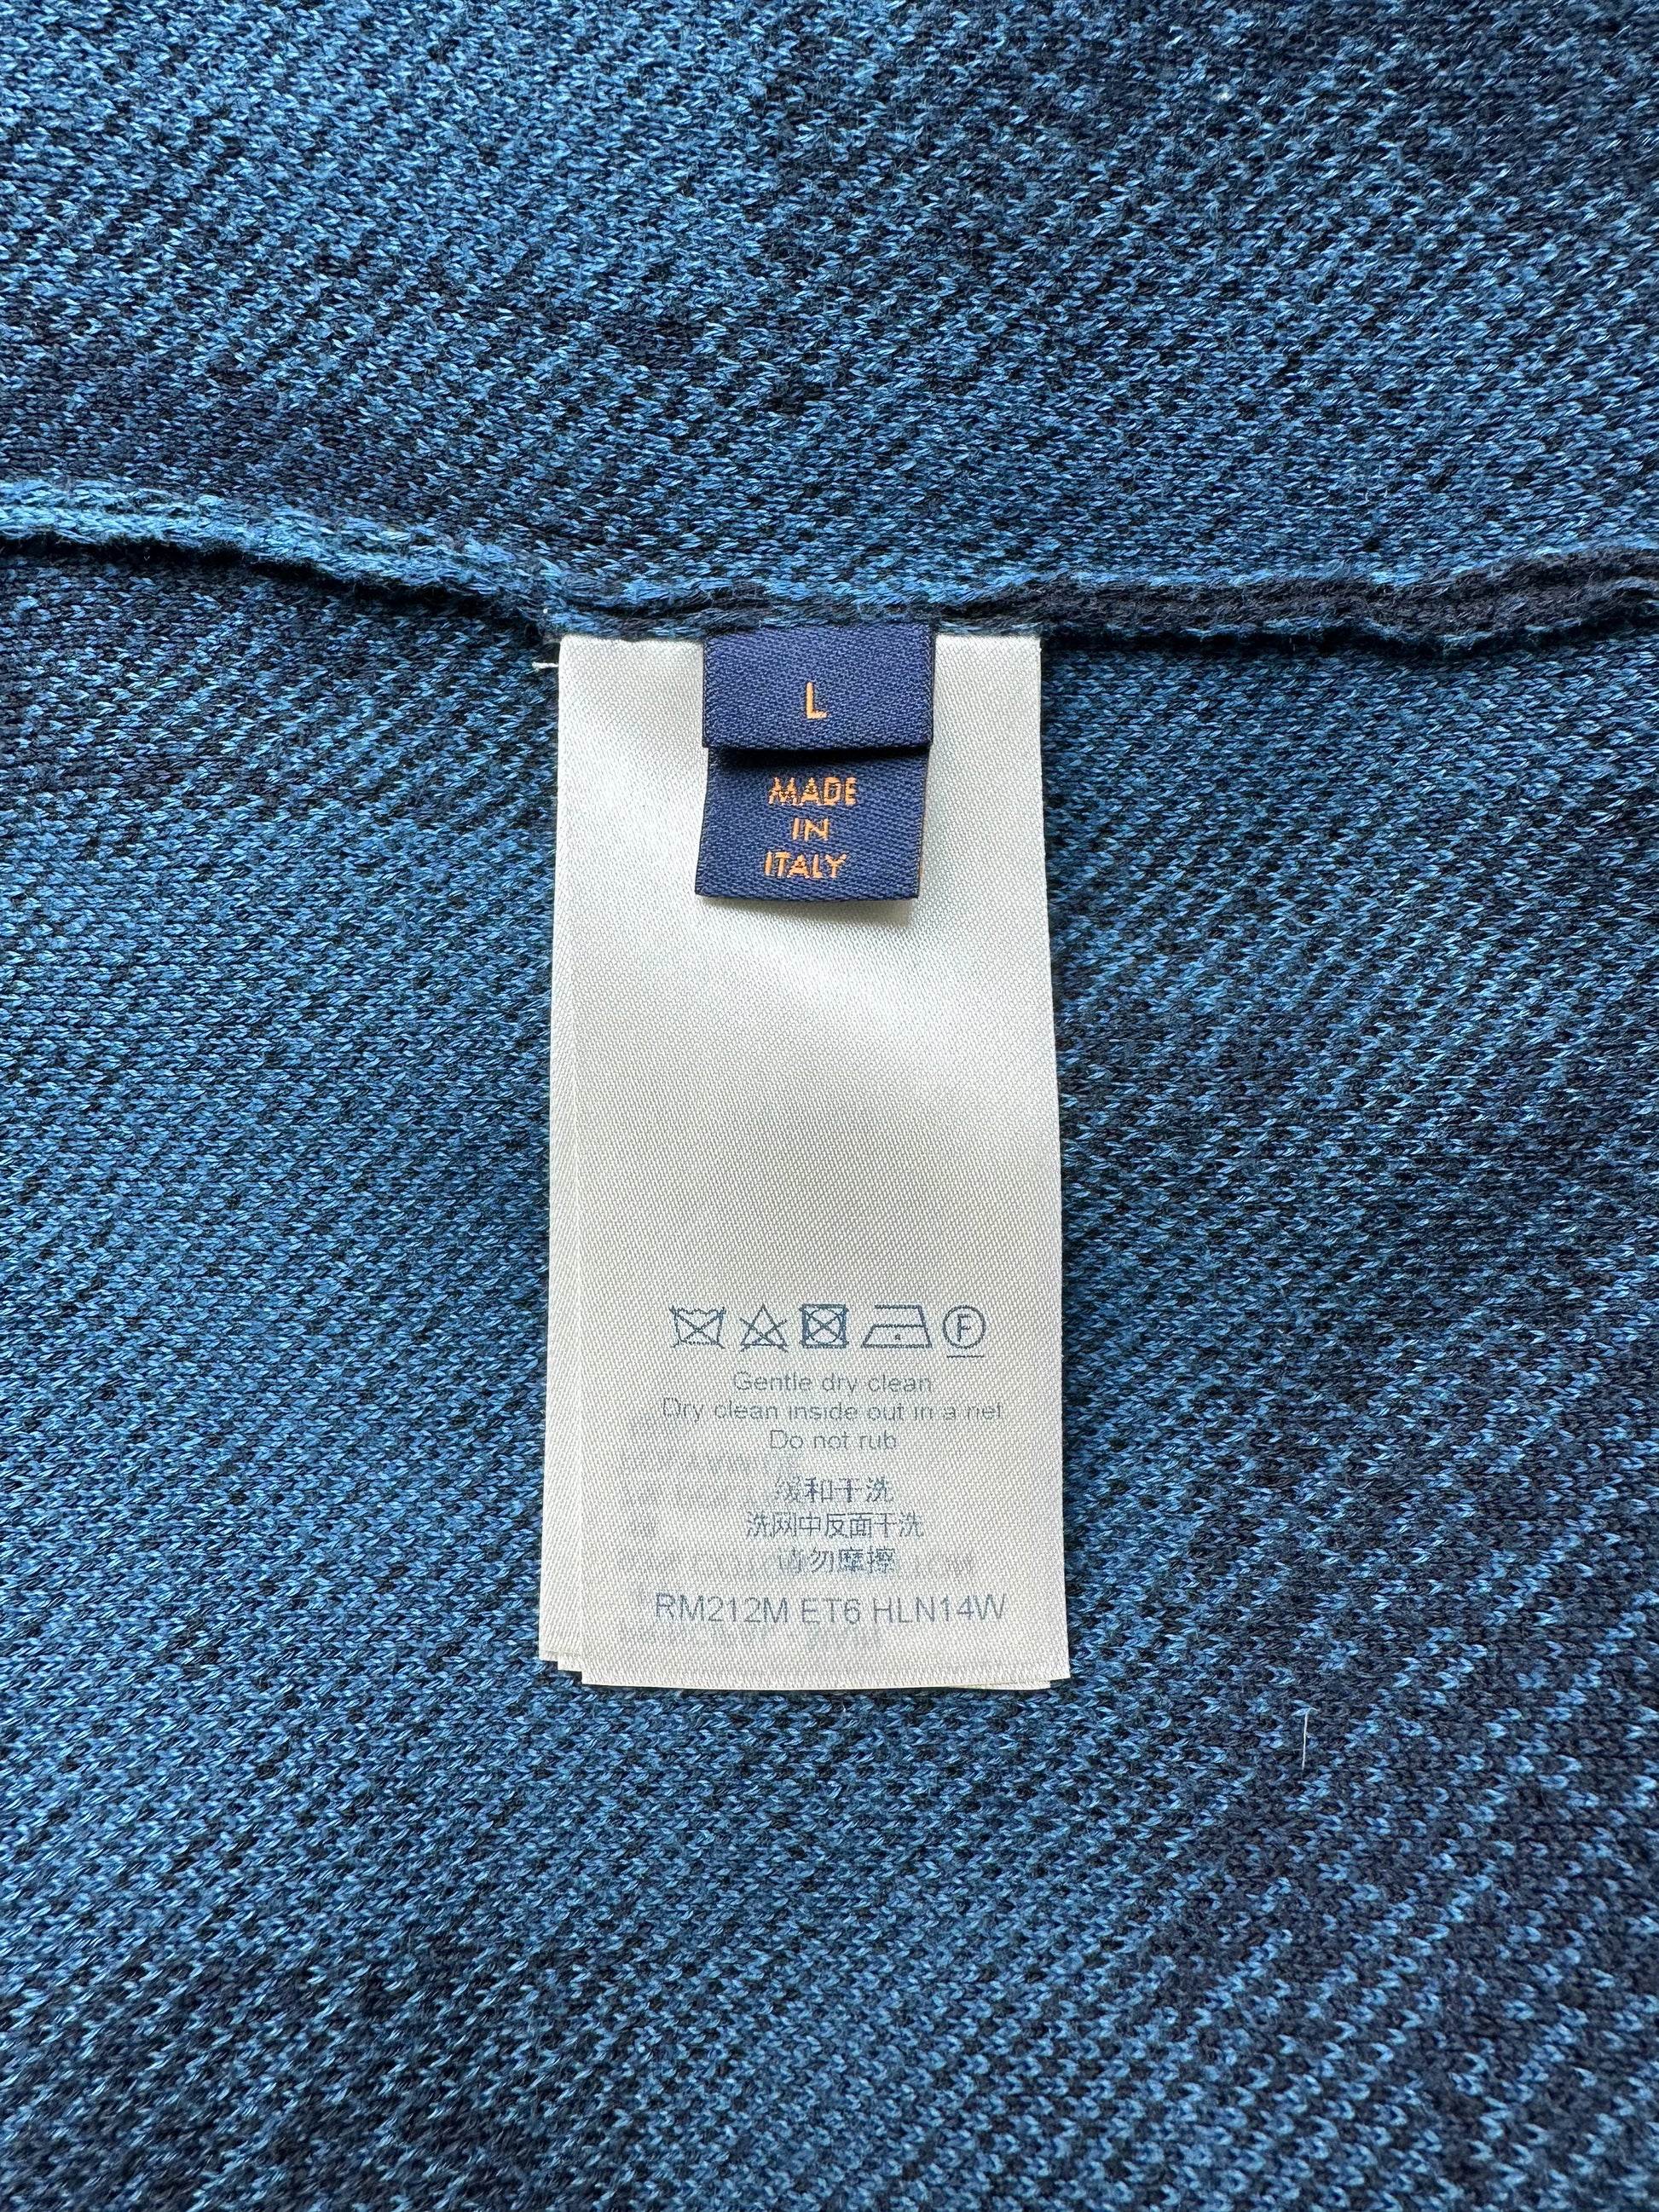 Louis Vuitton Distorted Damier Print Jeans – Savonches